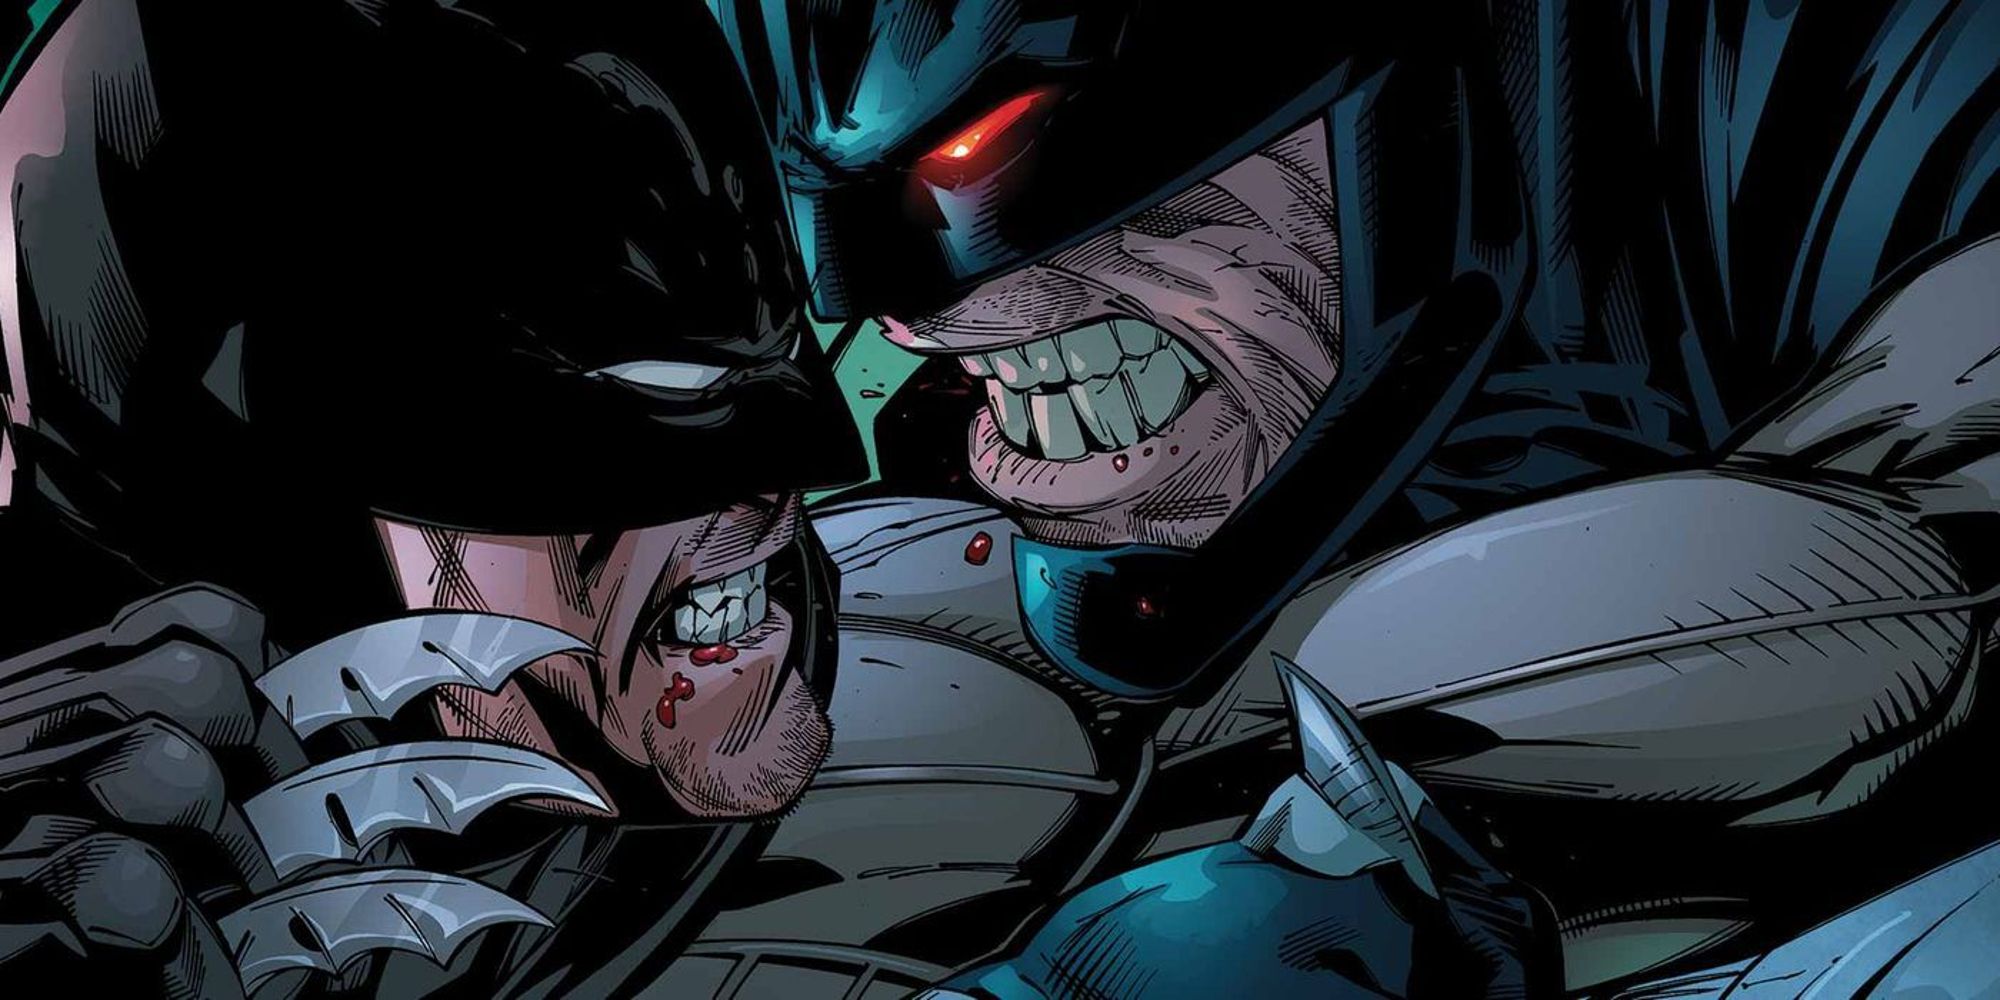 Bruce Wayne's Batman battling Thomas Wayne's Flashpoint Batman in DC Comics